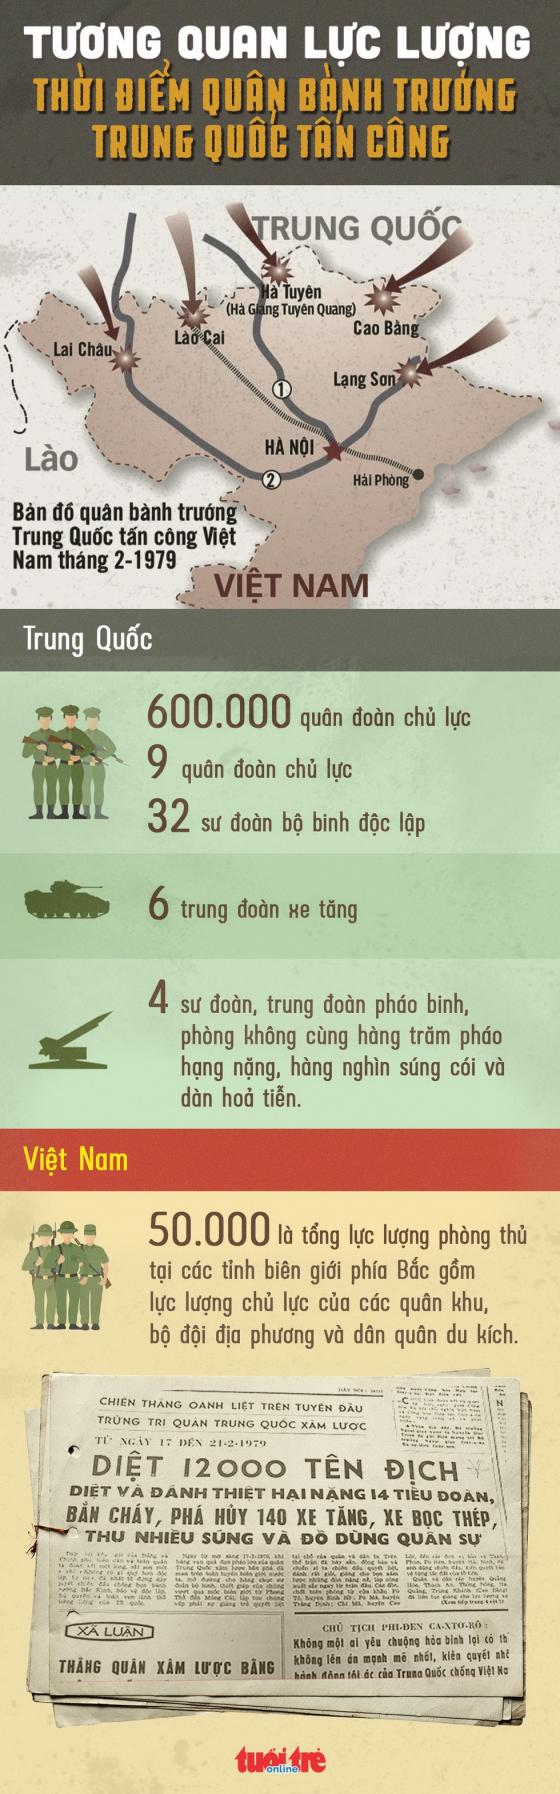 42 1 Tuong Quan Luc Luong Thoi Diem Quan Banh Truong Trung Quoc Tan Cong Viet Nam